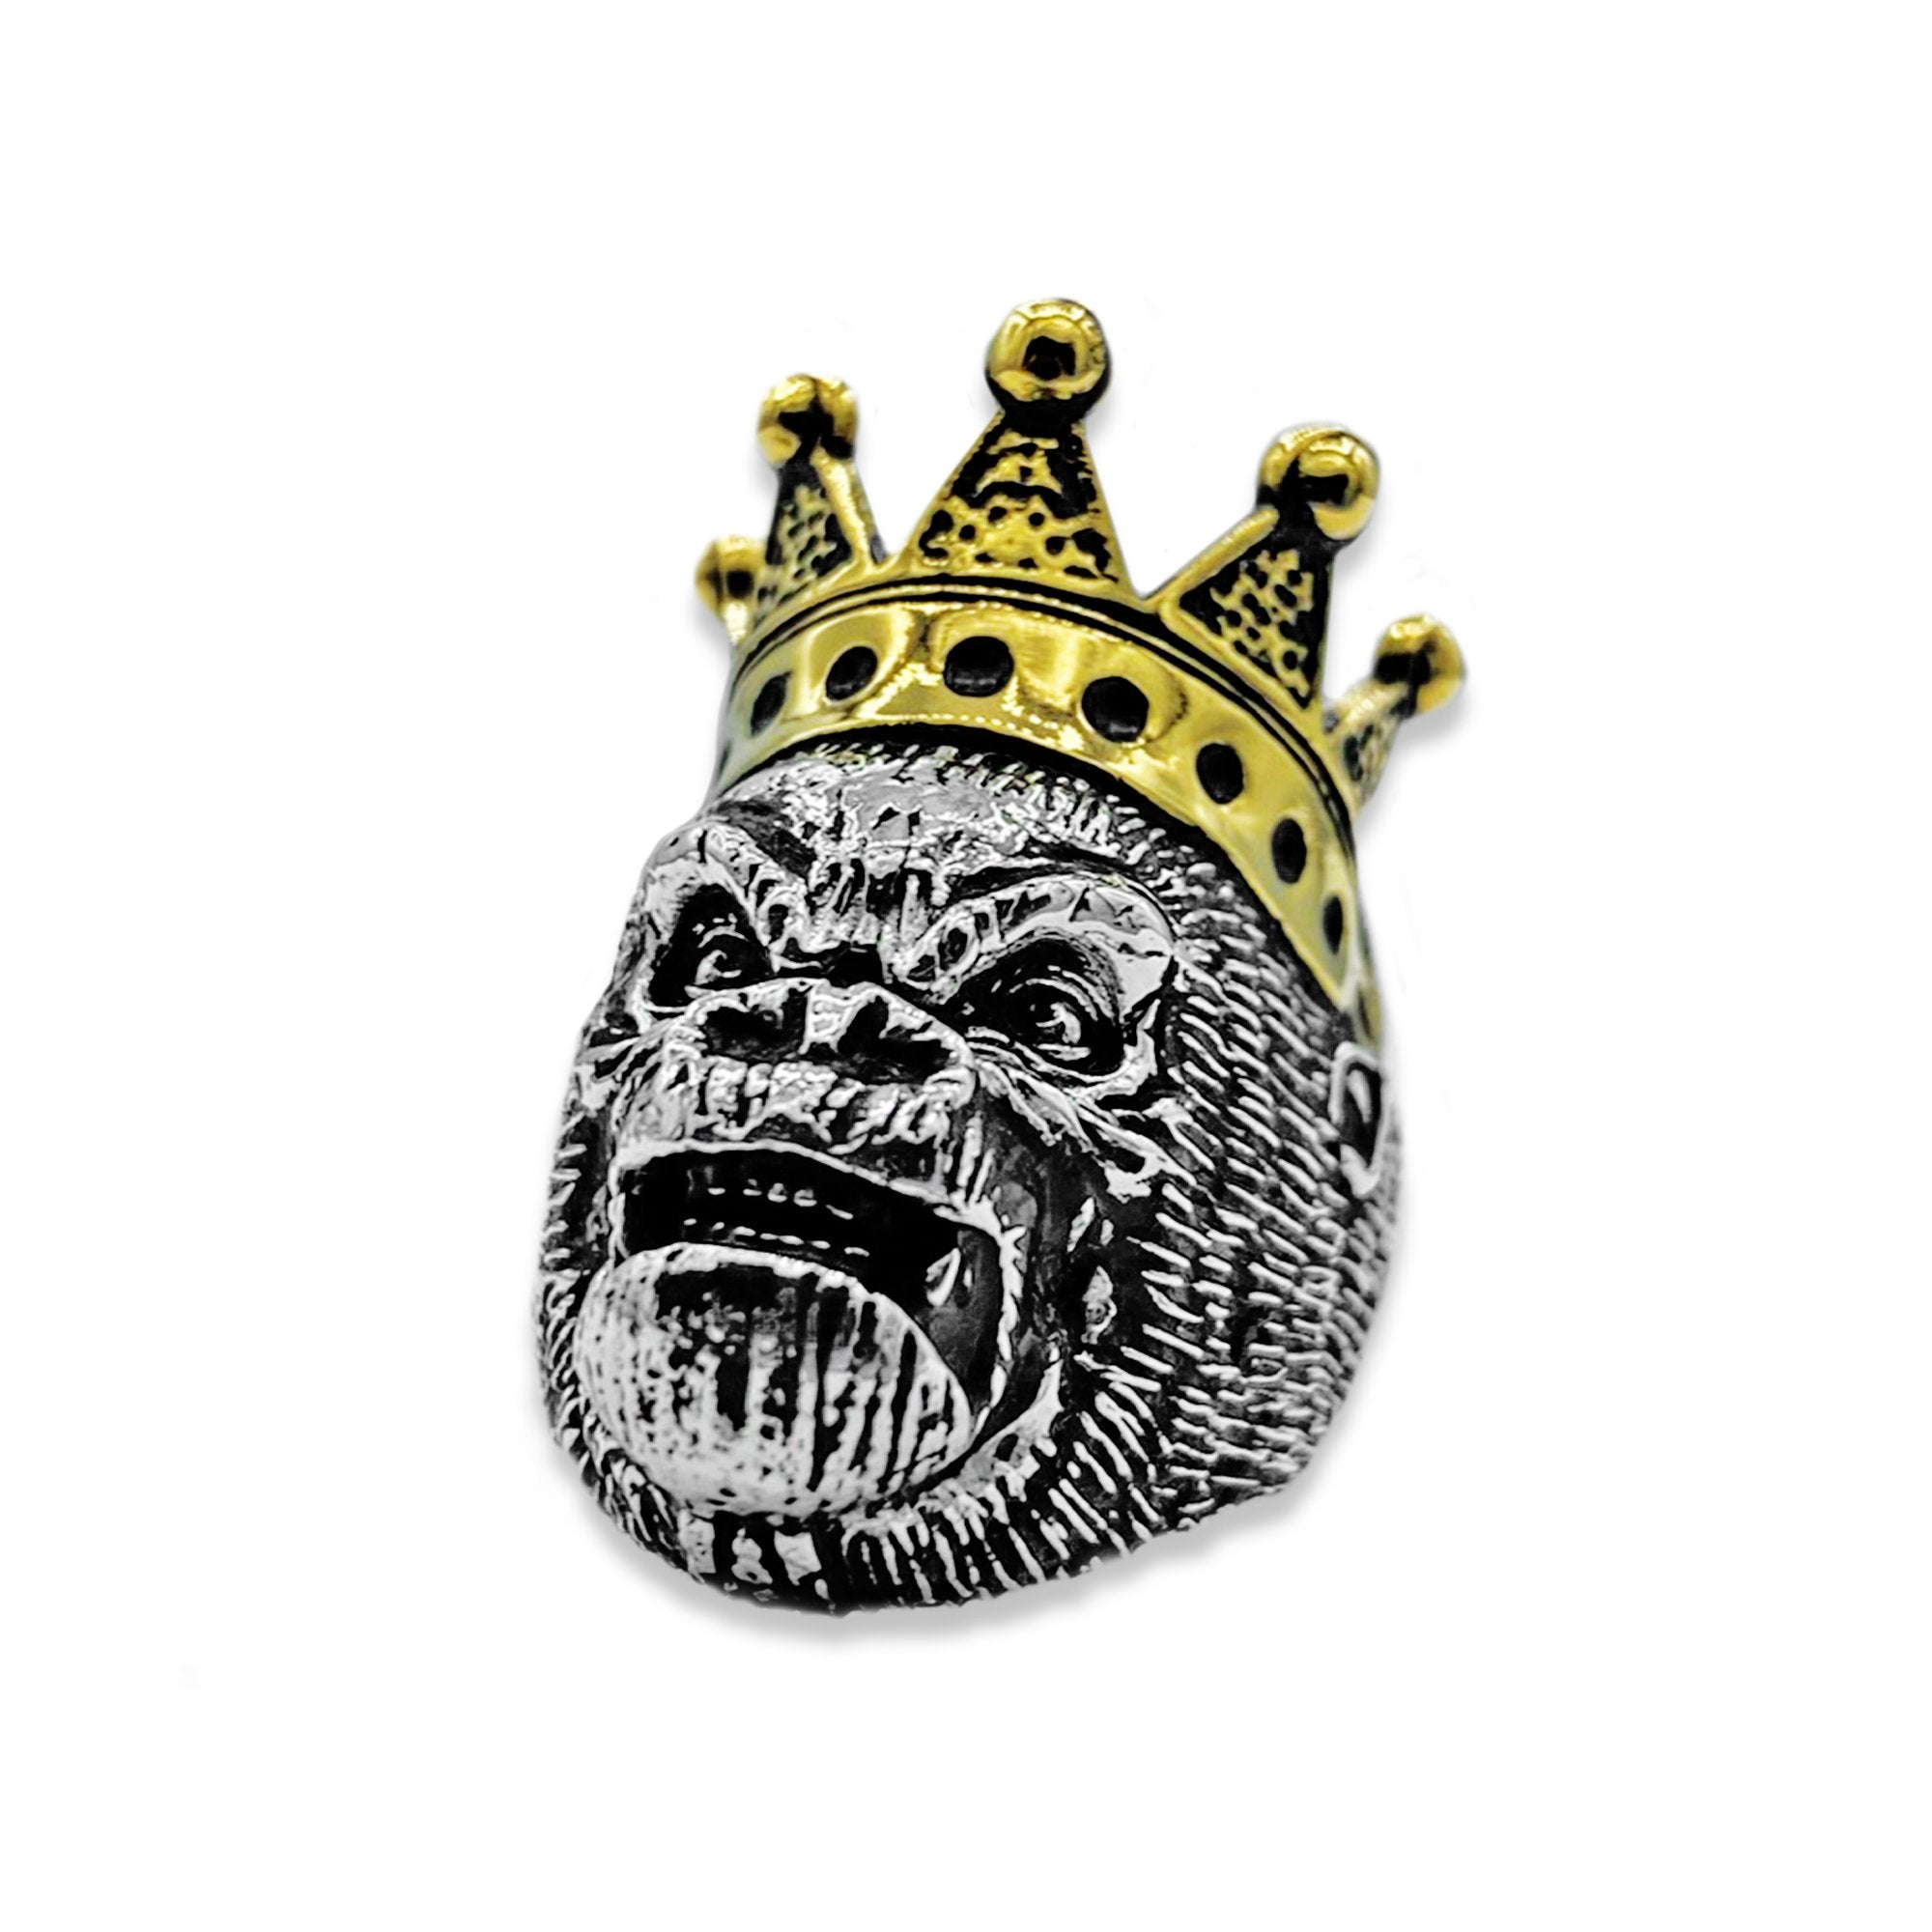 king kong 8th wonder of the world, king kong ring, king kong merch, king kong jewelry